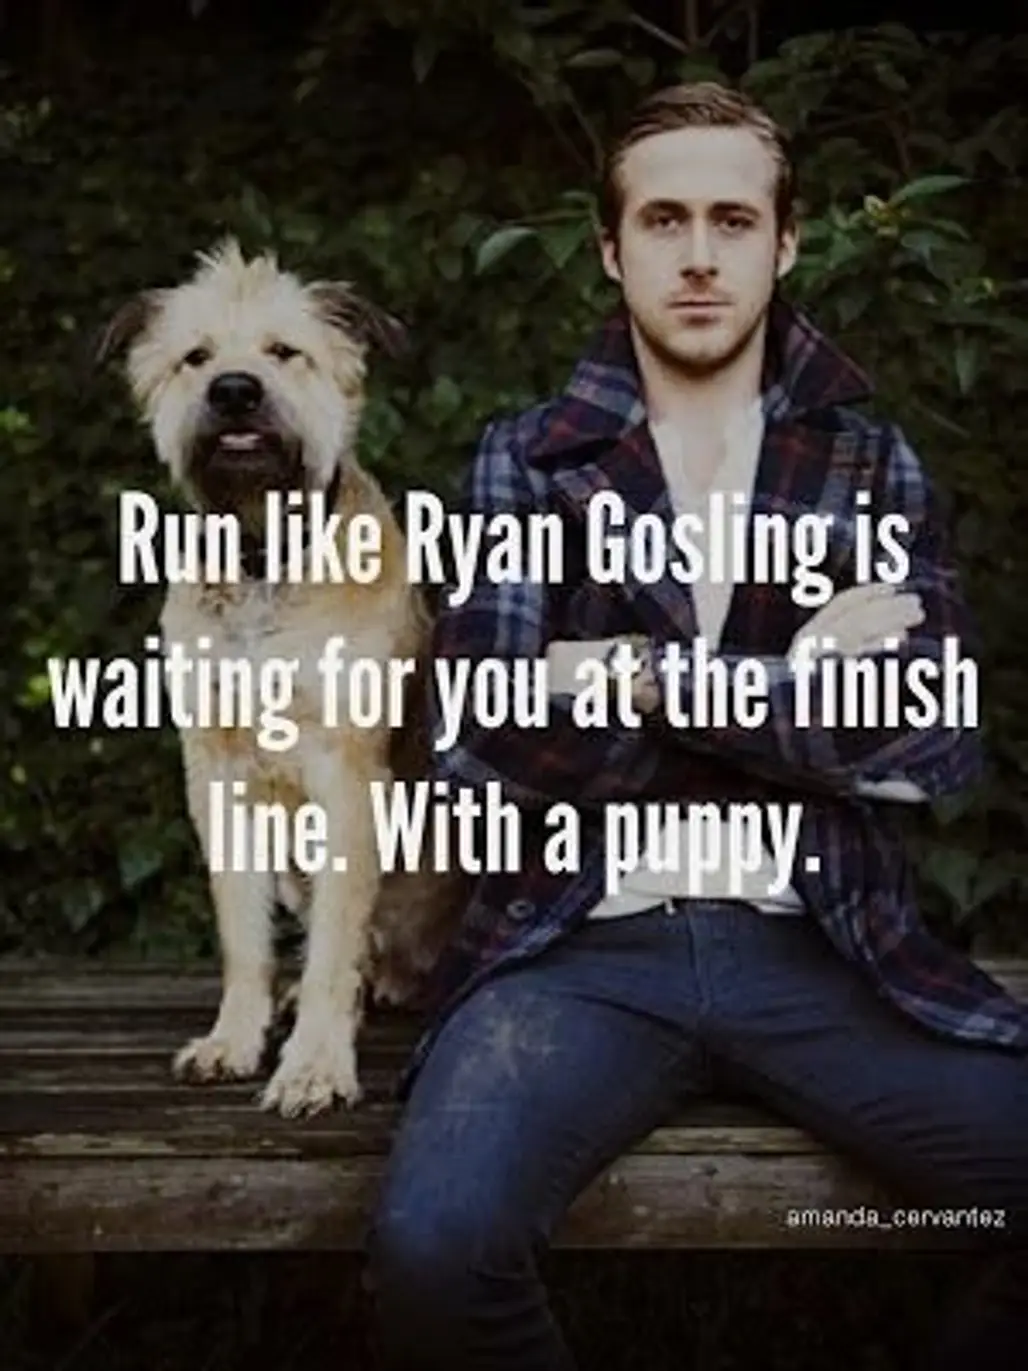 dog like mammal,Runlike,Ryan,Gosling,Twaiting,